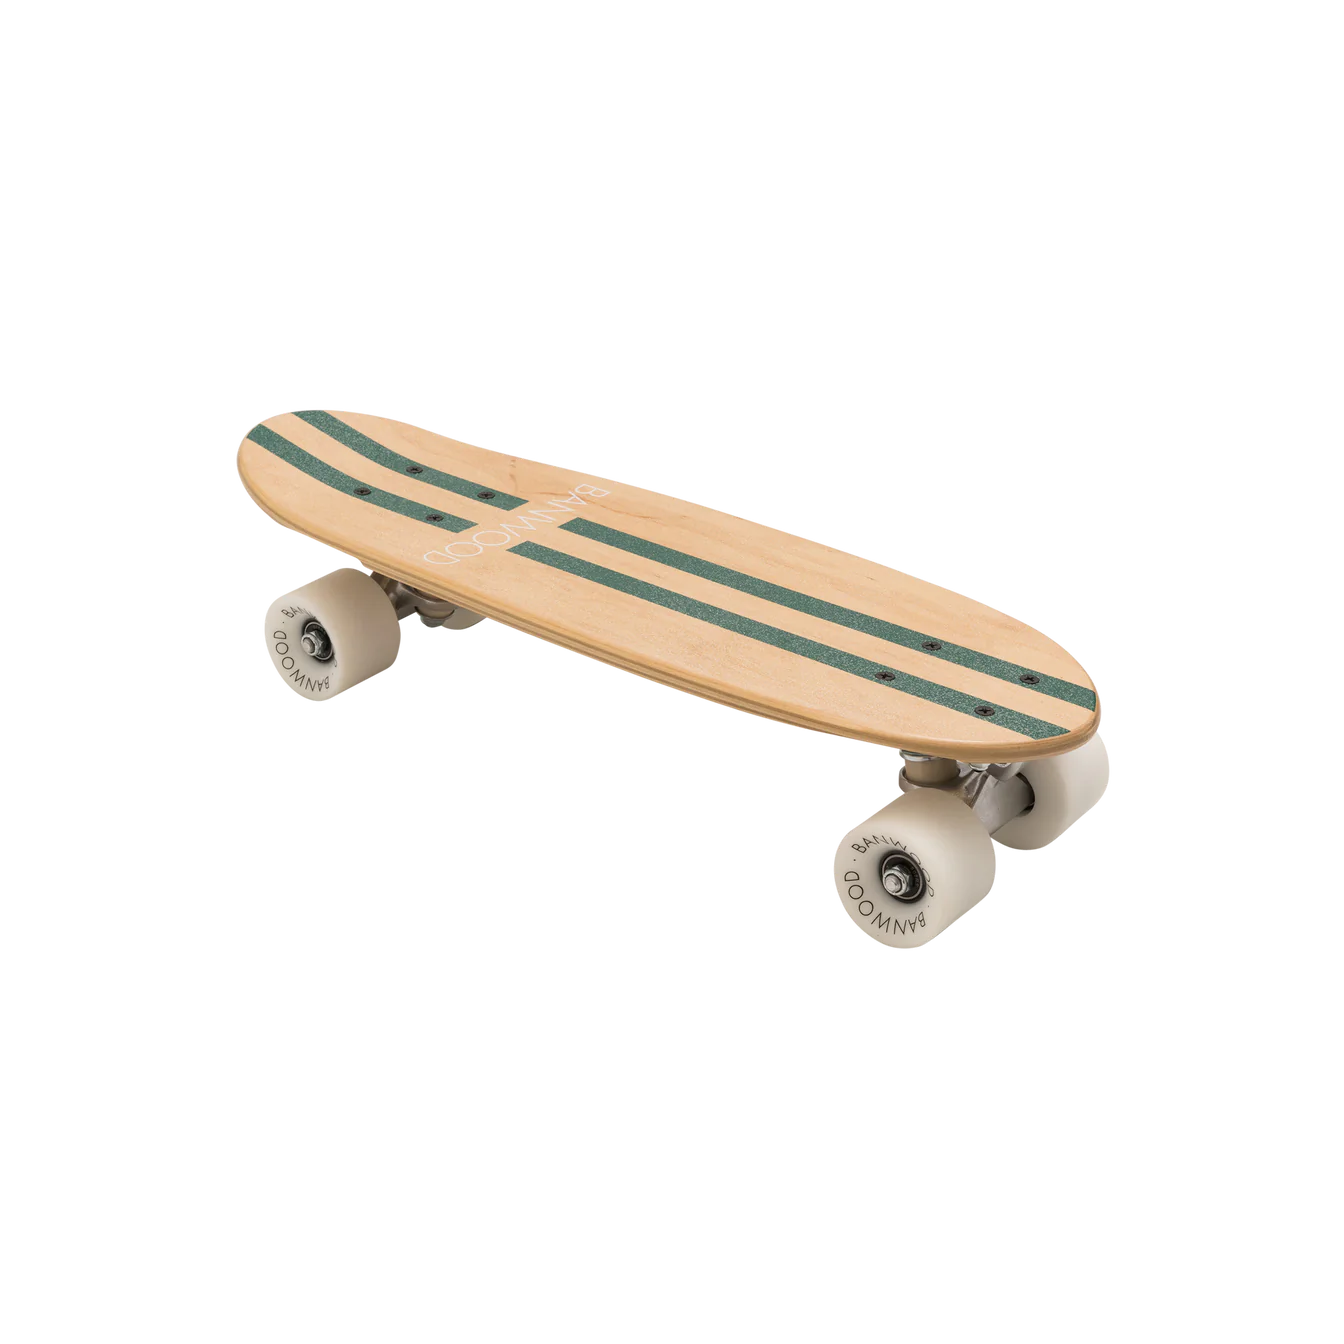 Banwood Skateboard Green